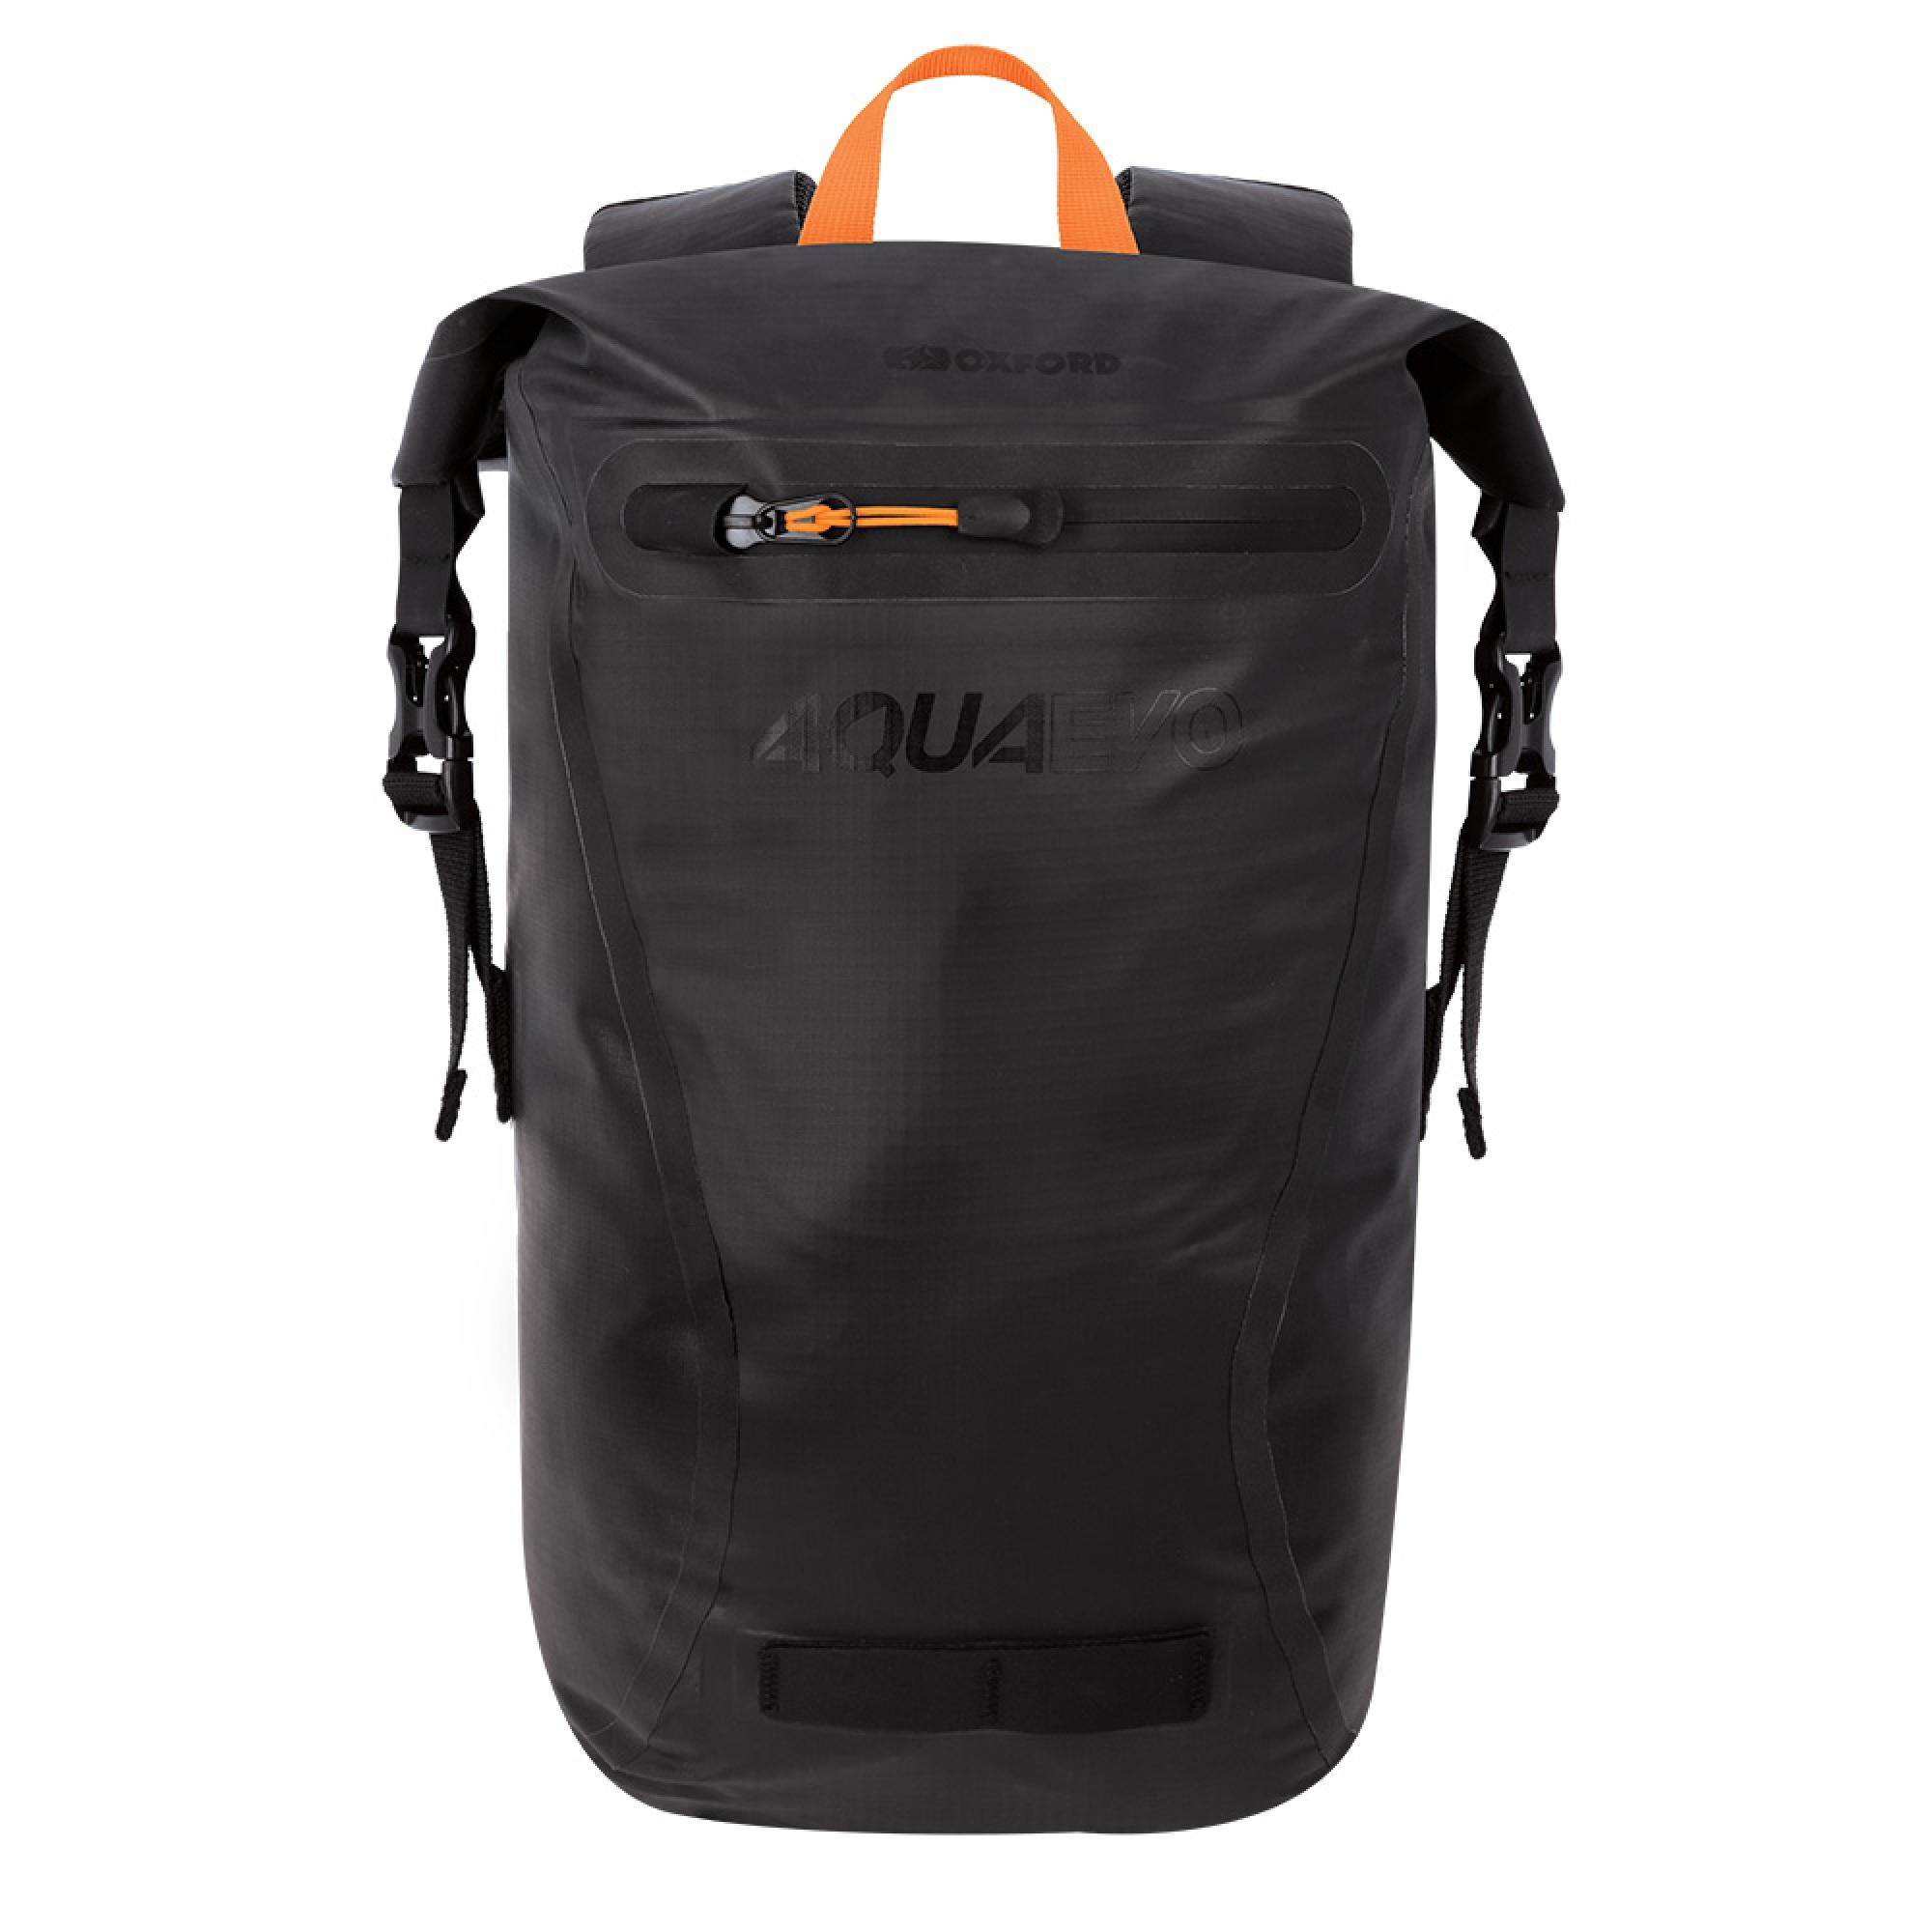 waterproof commuter backpack